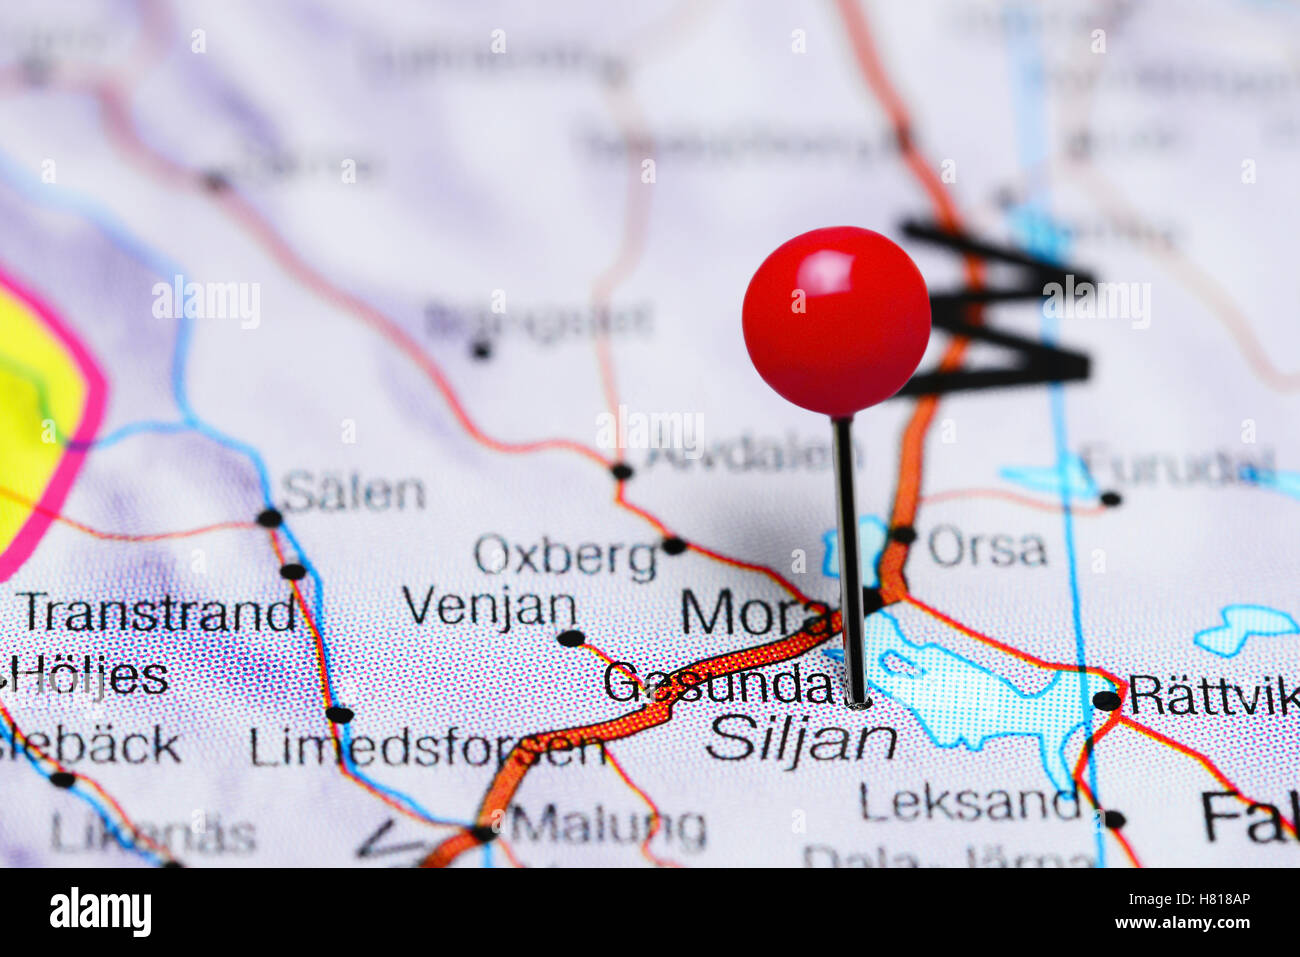 Gesunda pinned on a map of Sweden Stock Photo